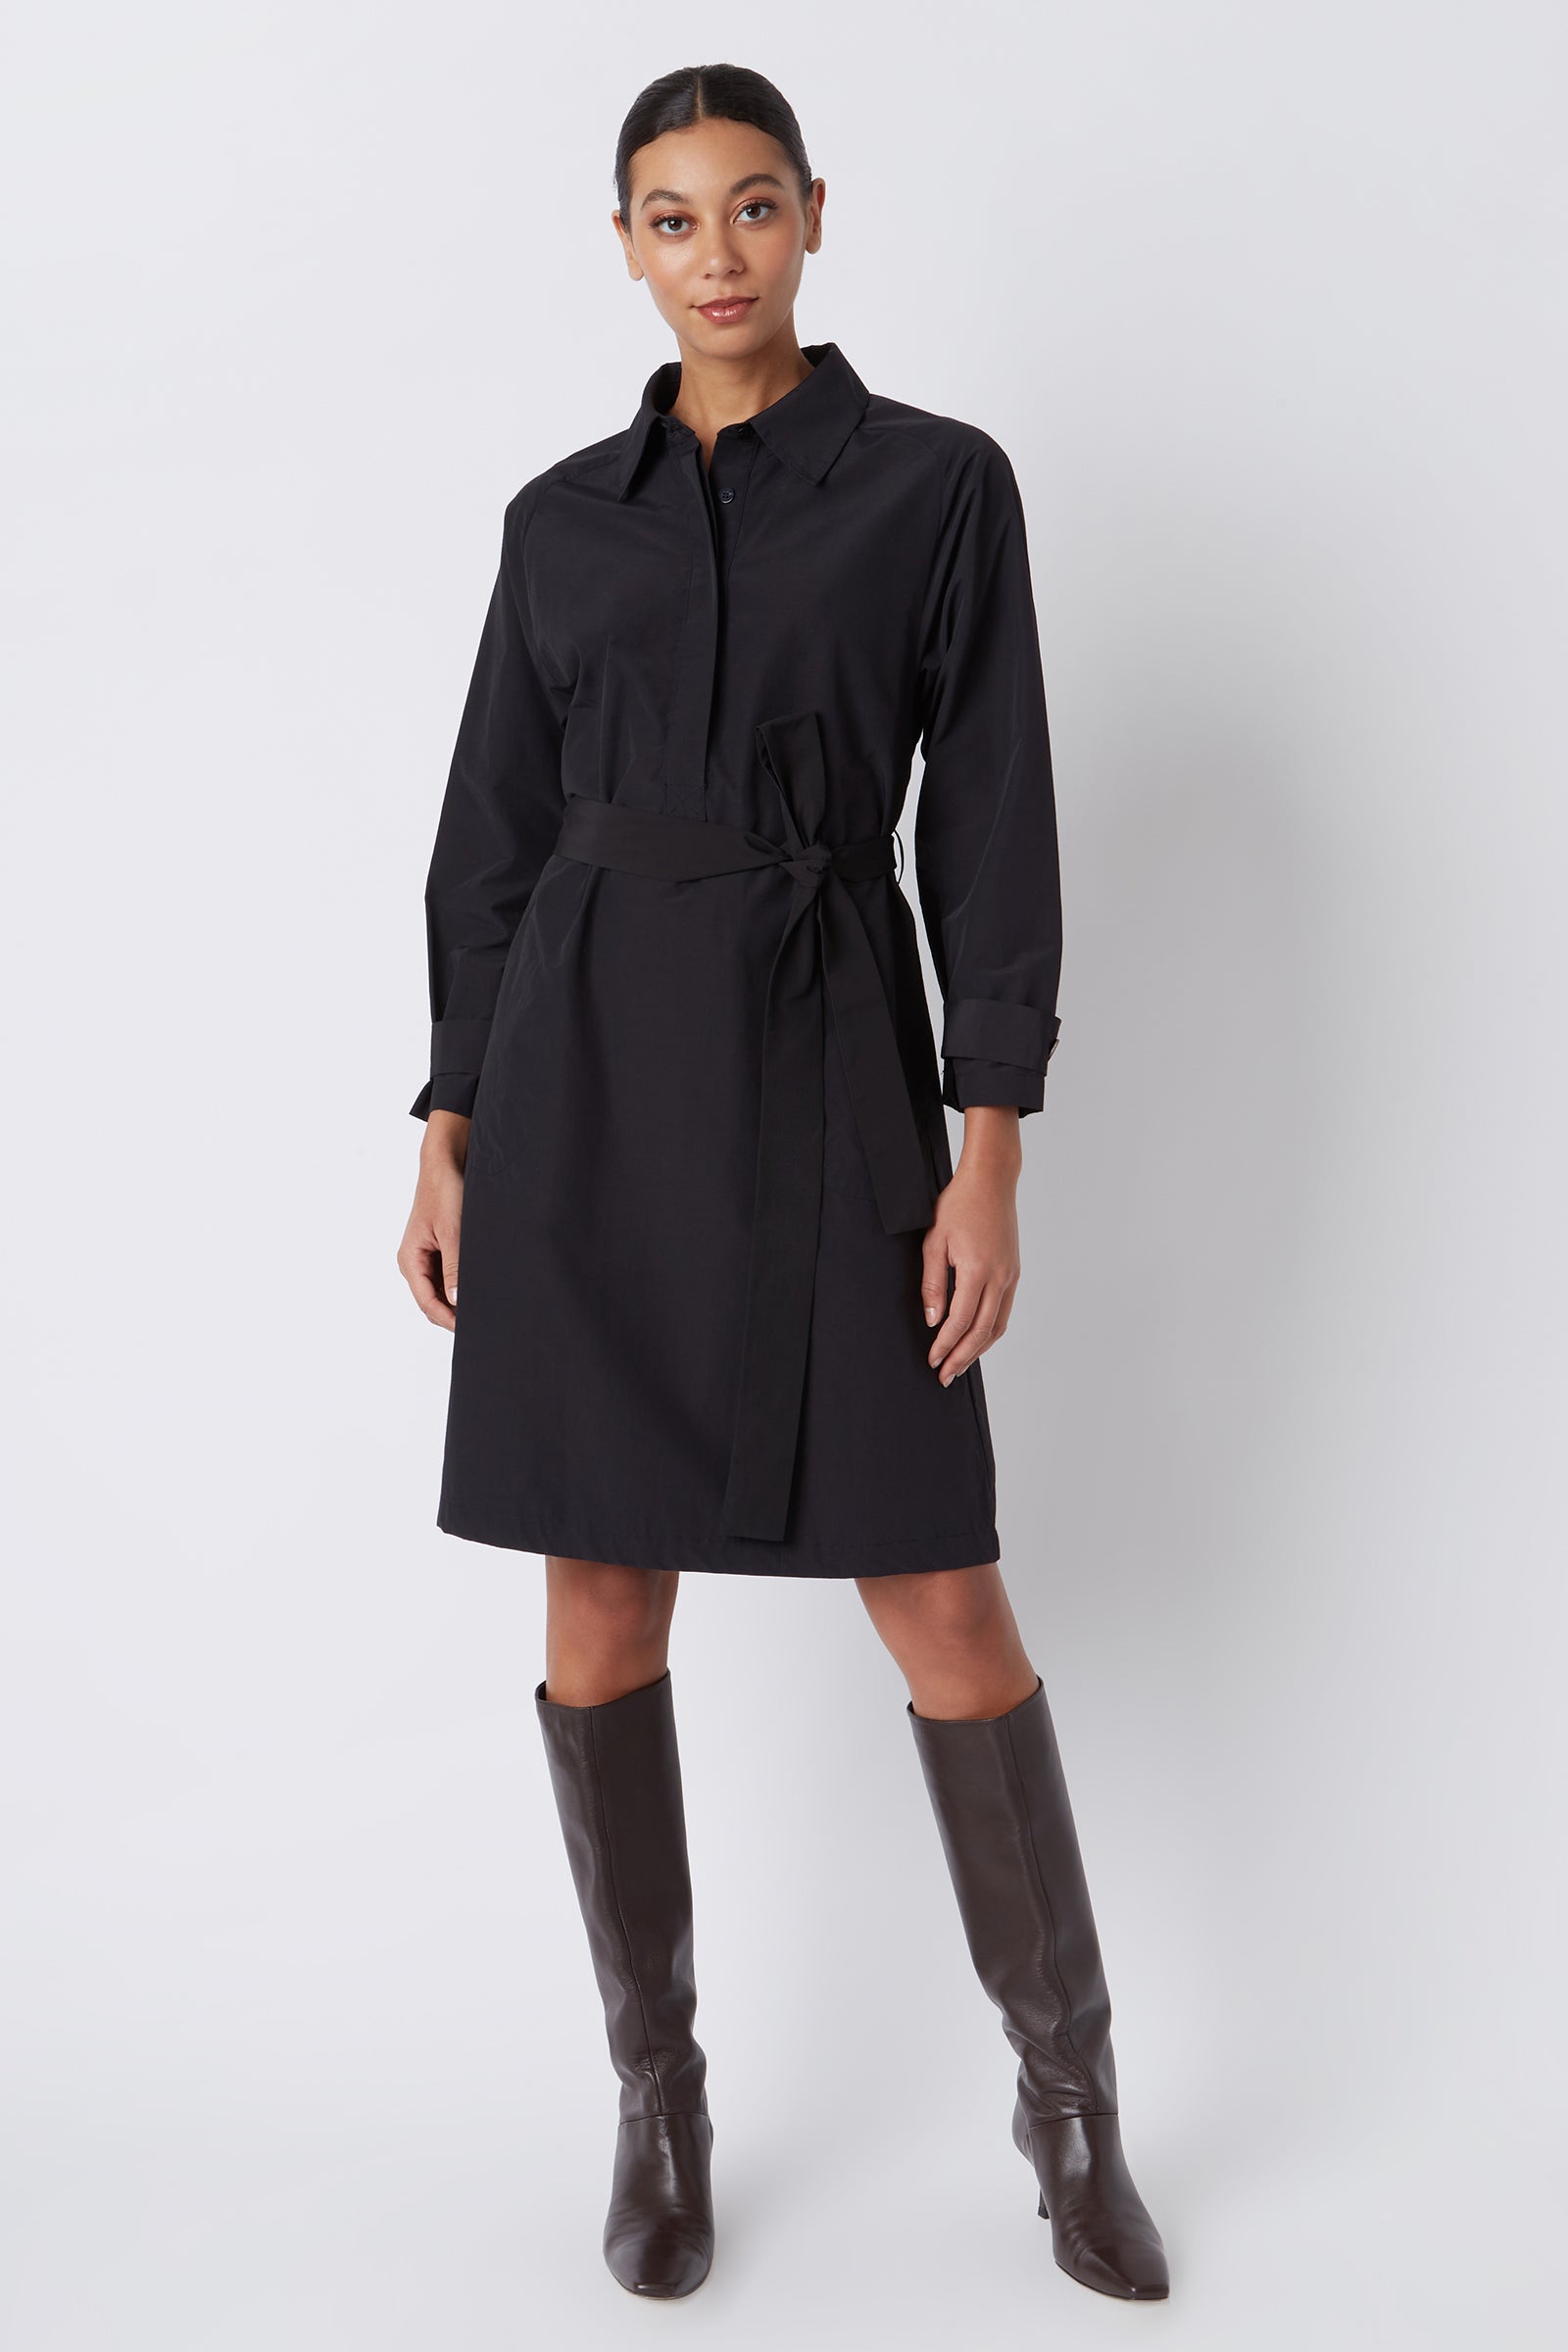 Kal Rieman Bonnie Pleat Back Dress in Black Italian Broadcloth on Model Main Full Front View